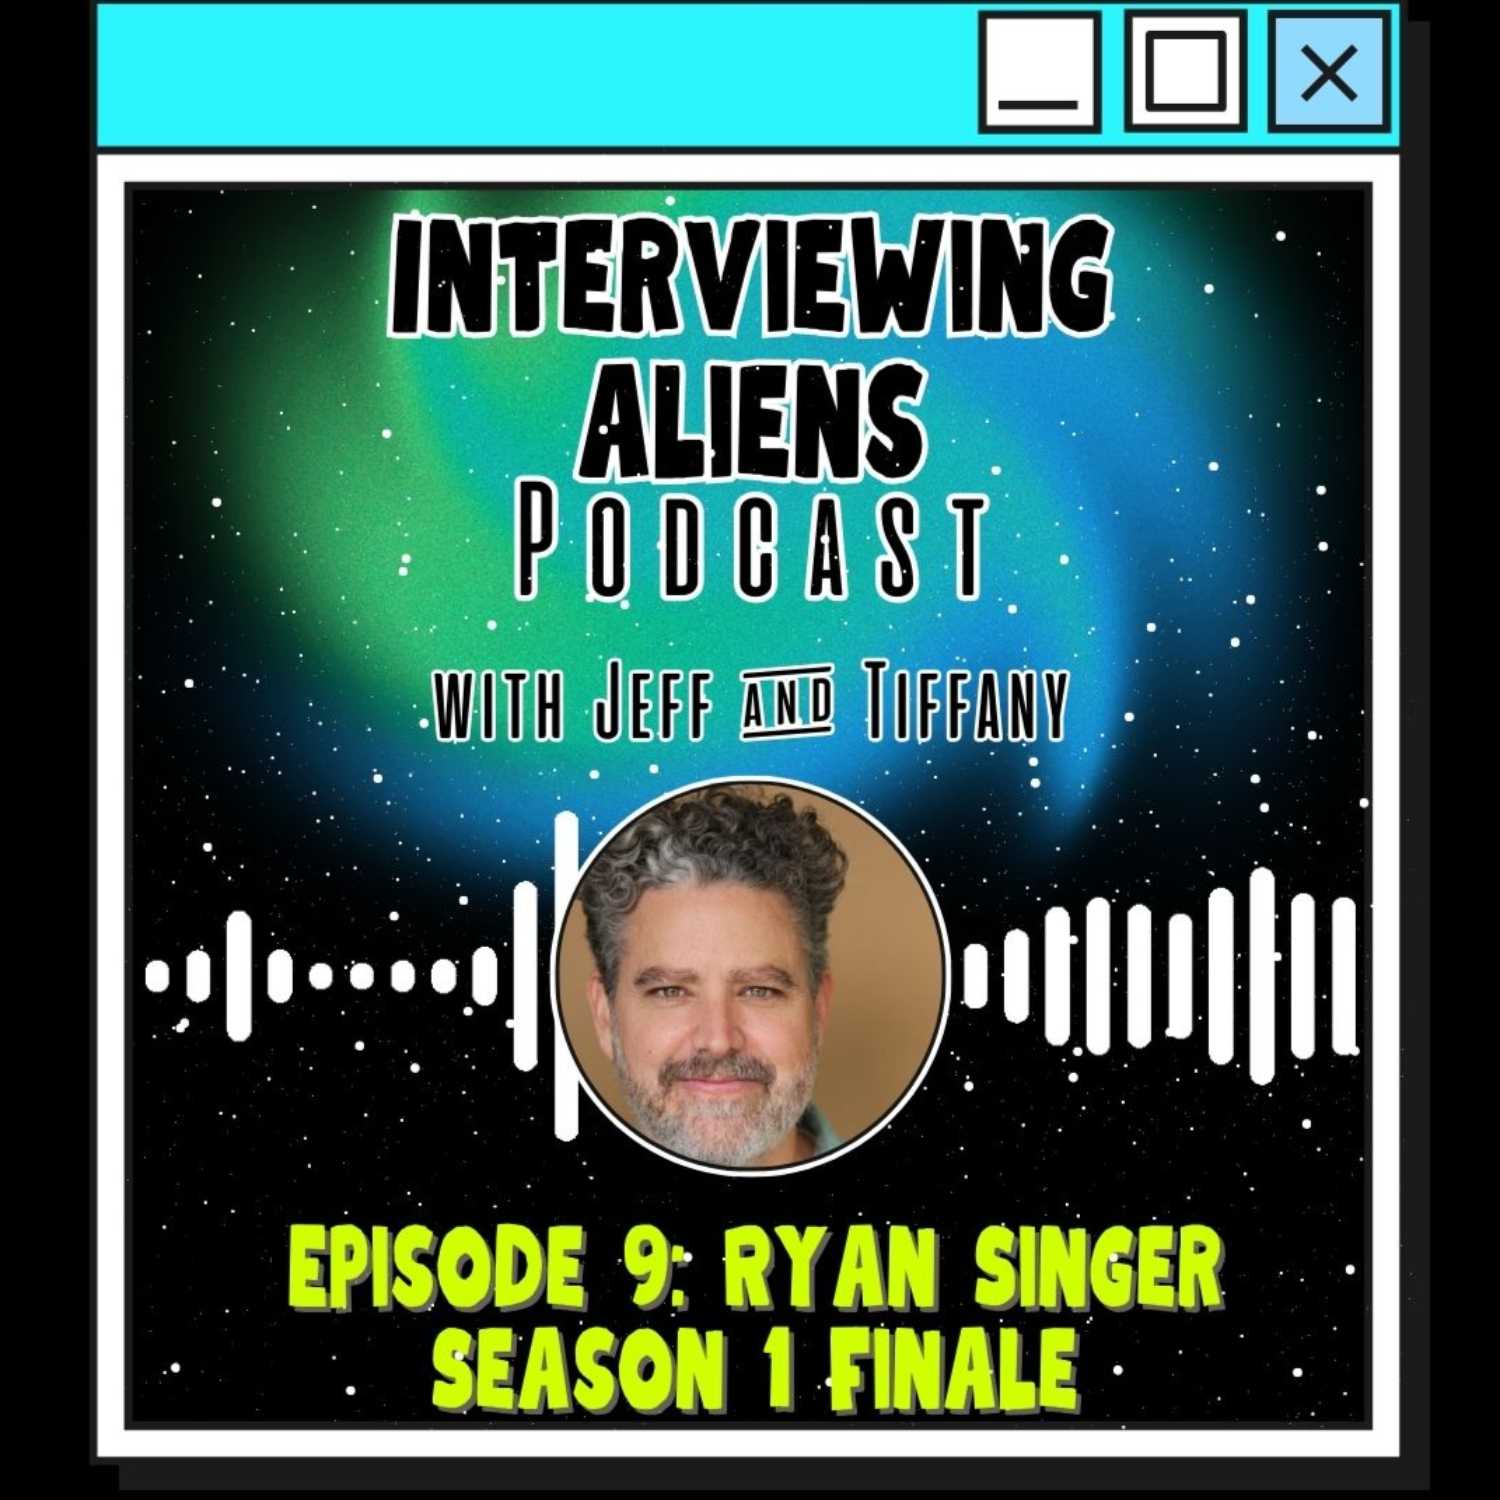 Interviewing Aliens episode 9: Ryan Singer (Season finale)